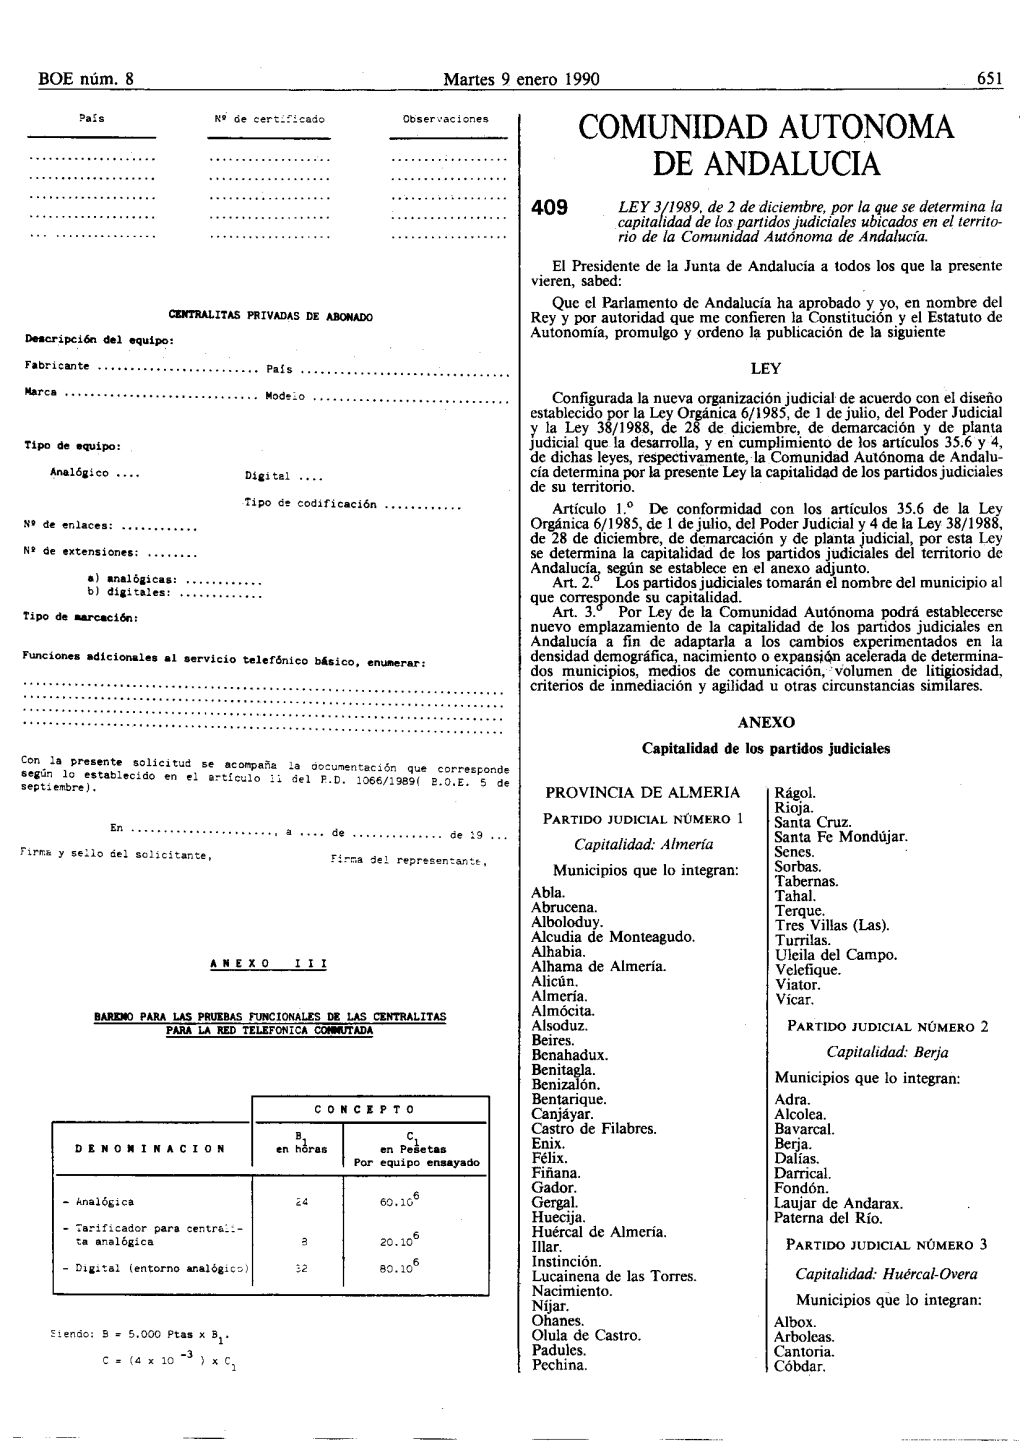 Comunidad Autonoma De Andalucia 409 Ley 3/1989